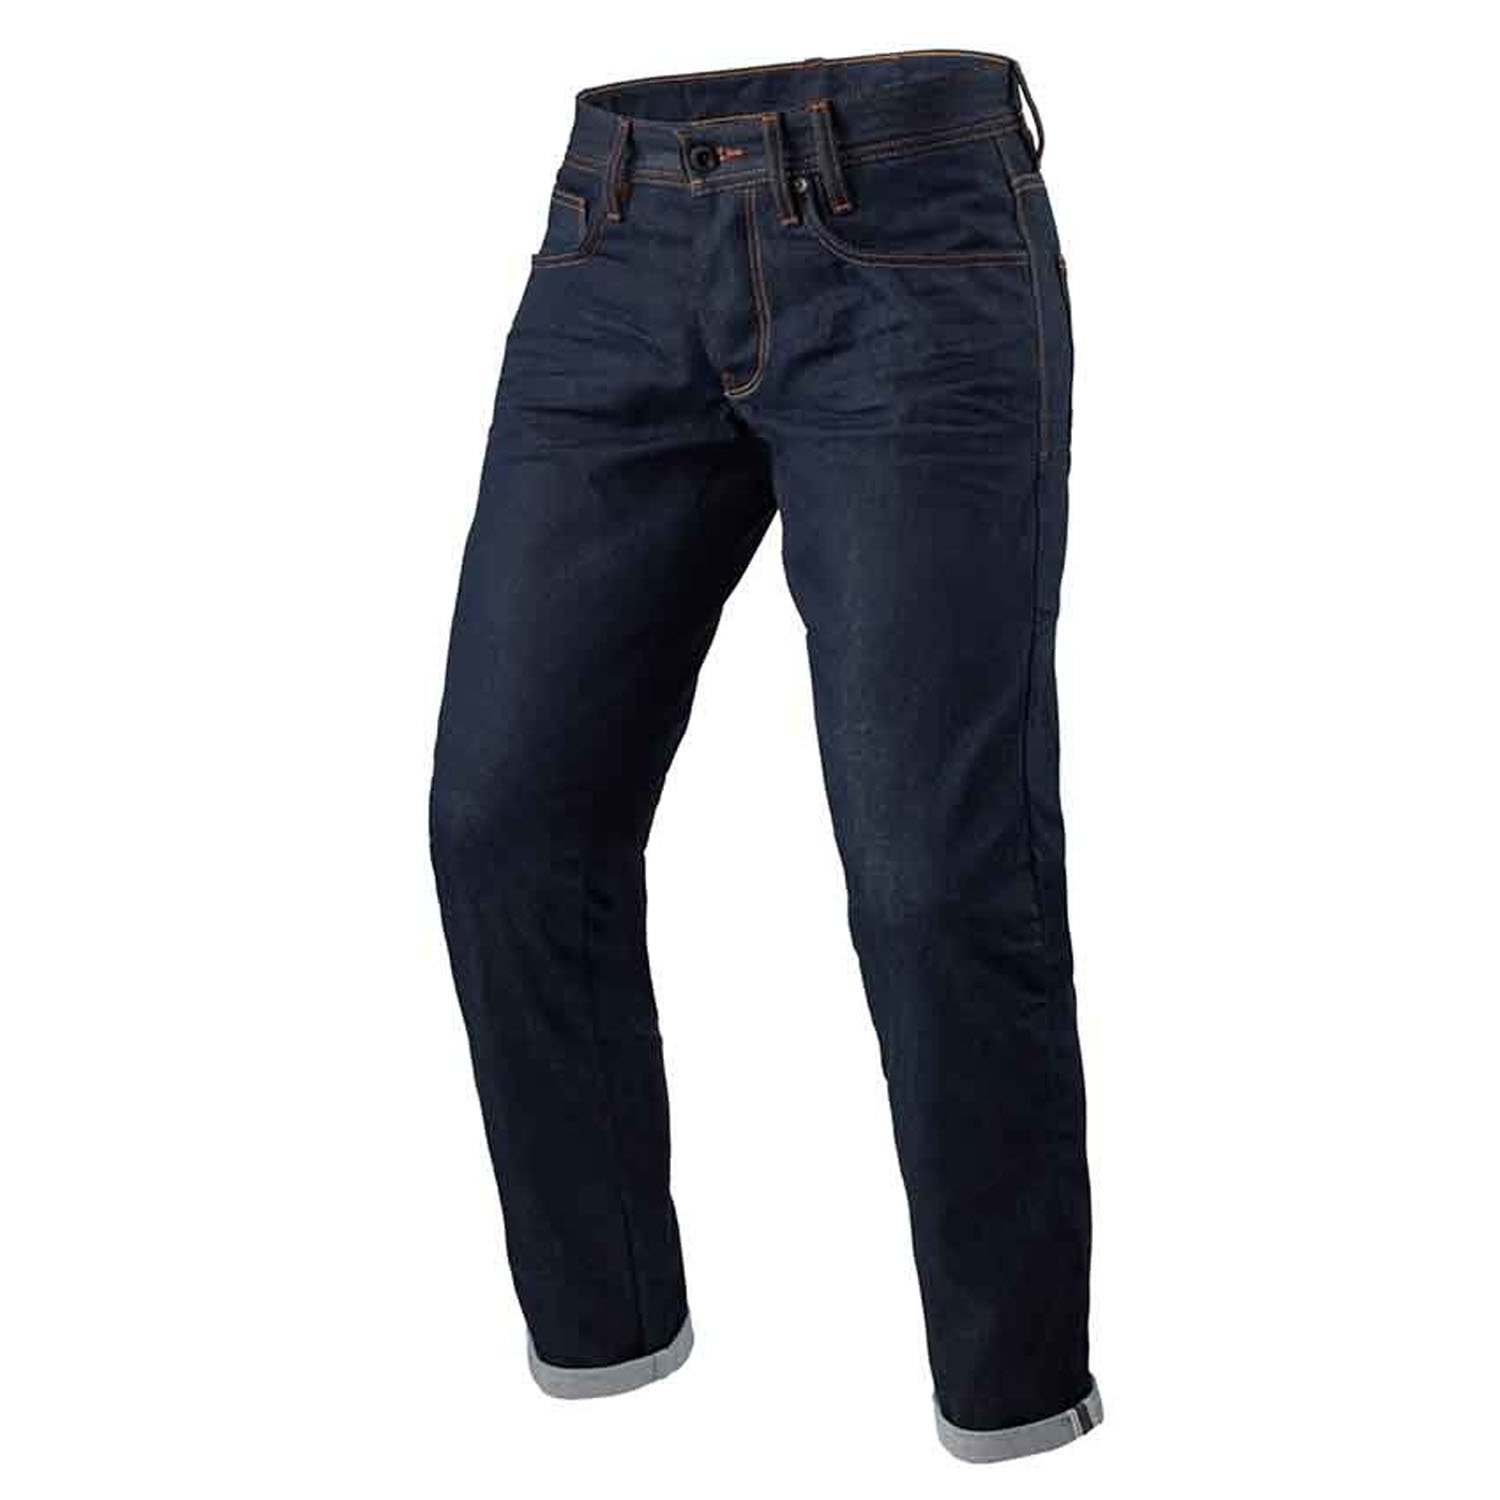 Image of REV'IT! Jeans Lewis Selvedge TF Dark Blue L36 Motorcycle Pants Größe L36/W33